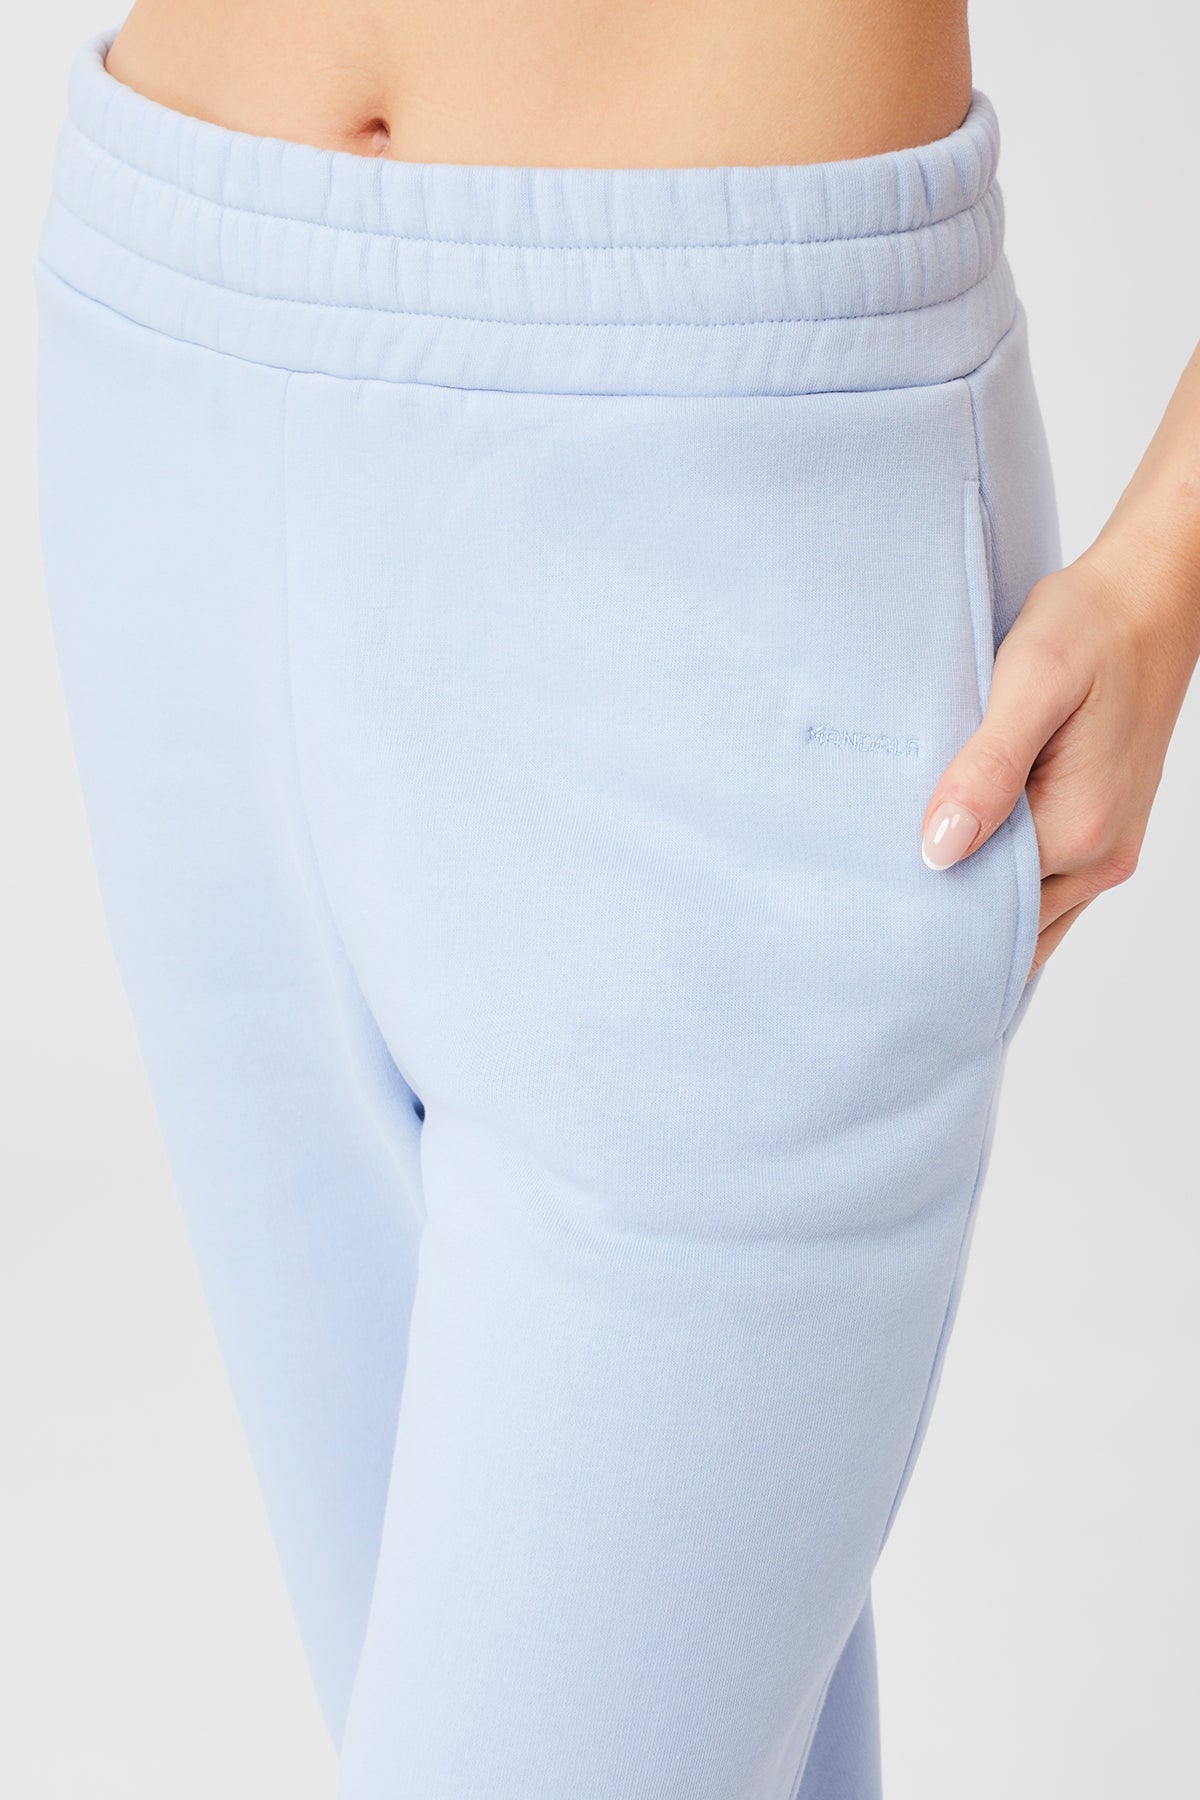 Mandala Yoga Pant Blau Detail - Natural Dye Track Pants